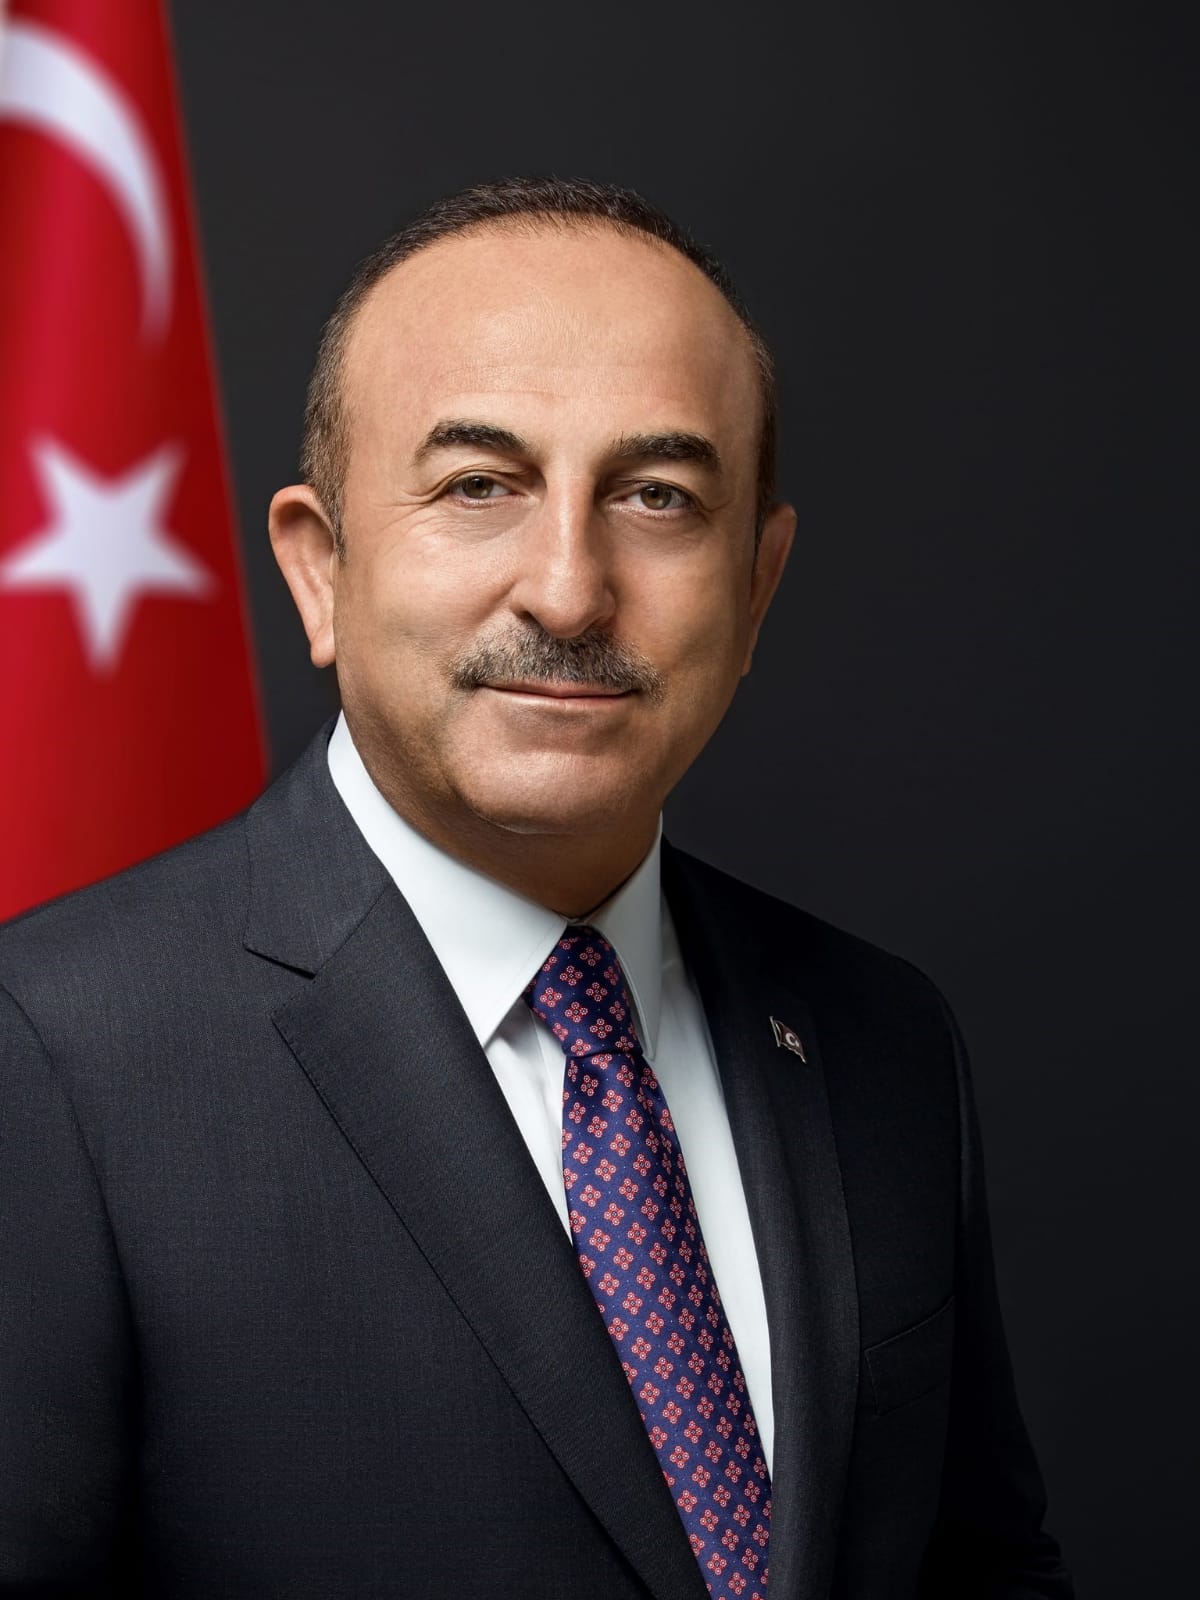 Mevlüt ÇavuşoğluMinistre des Affaires étrangères de Turkiye